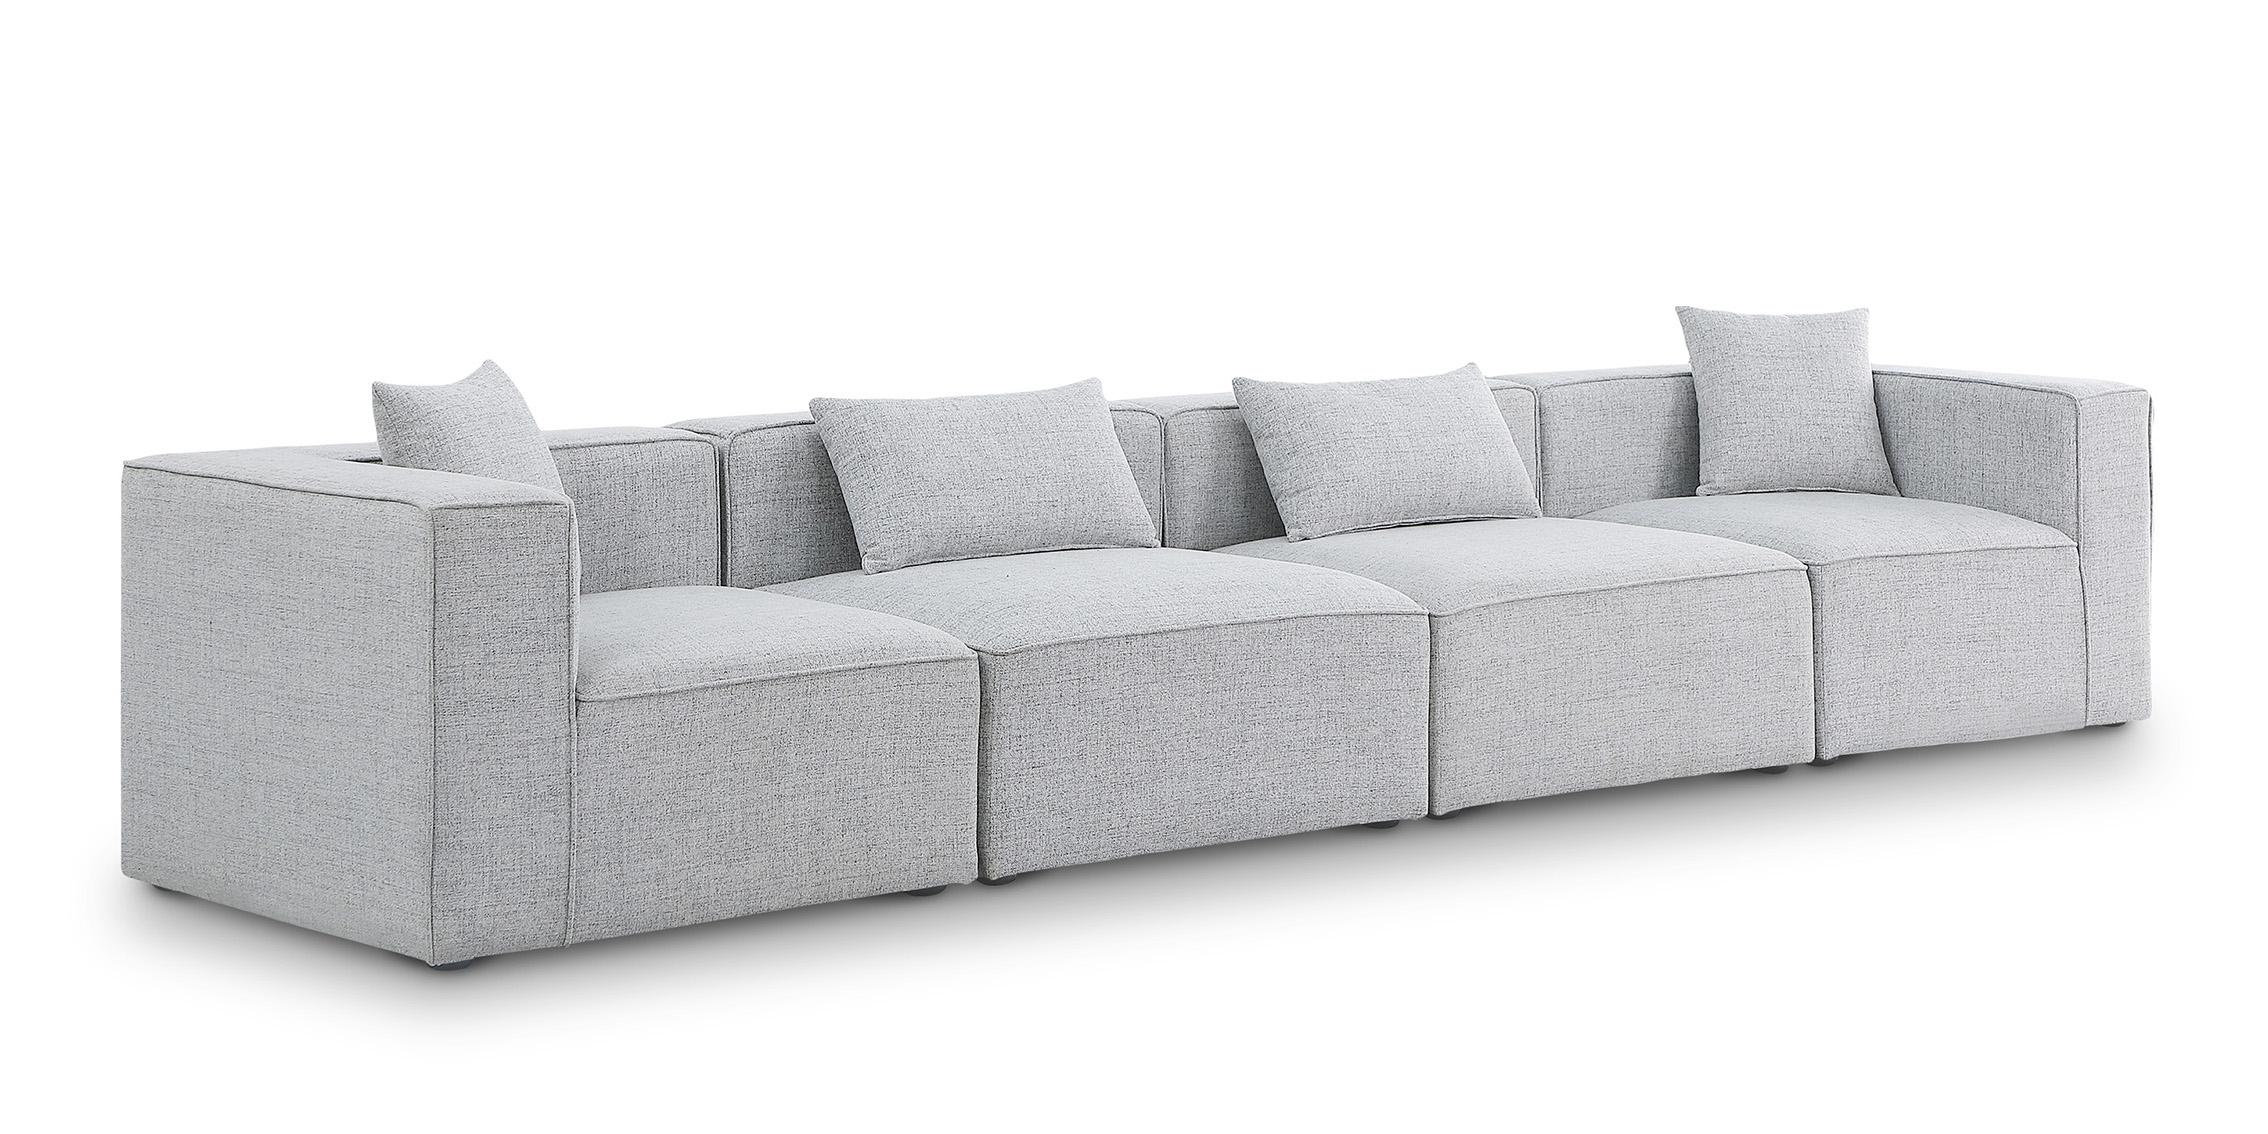 Contemporary, Modern Modular Sofa CUBE 630Grey-S144B 630Grey-S144B in Gray Linen